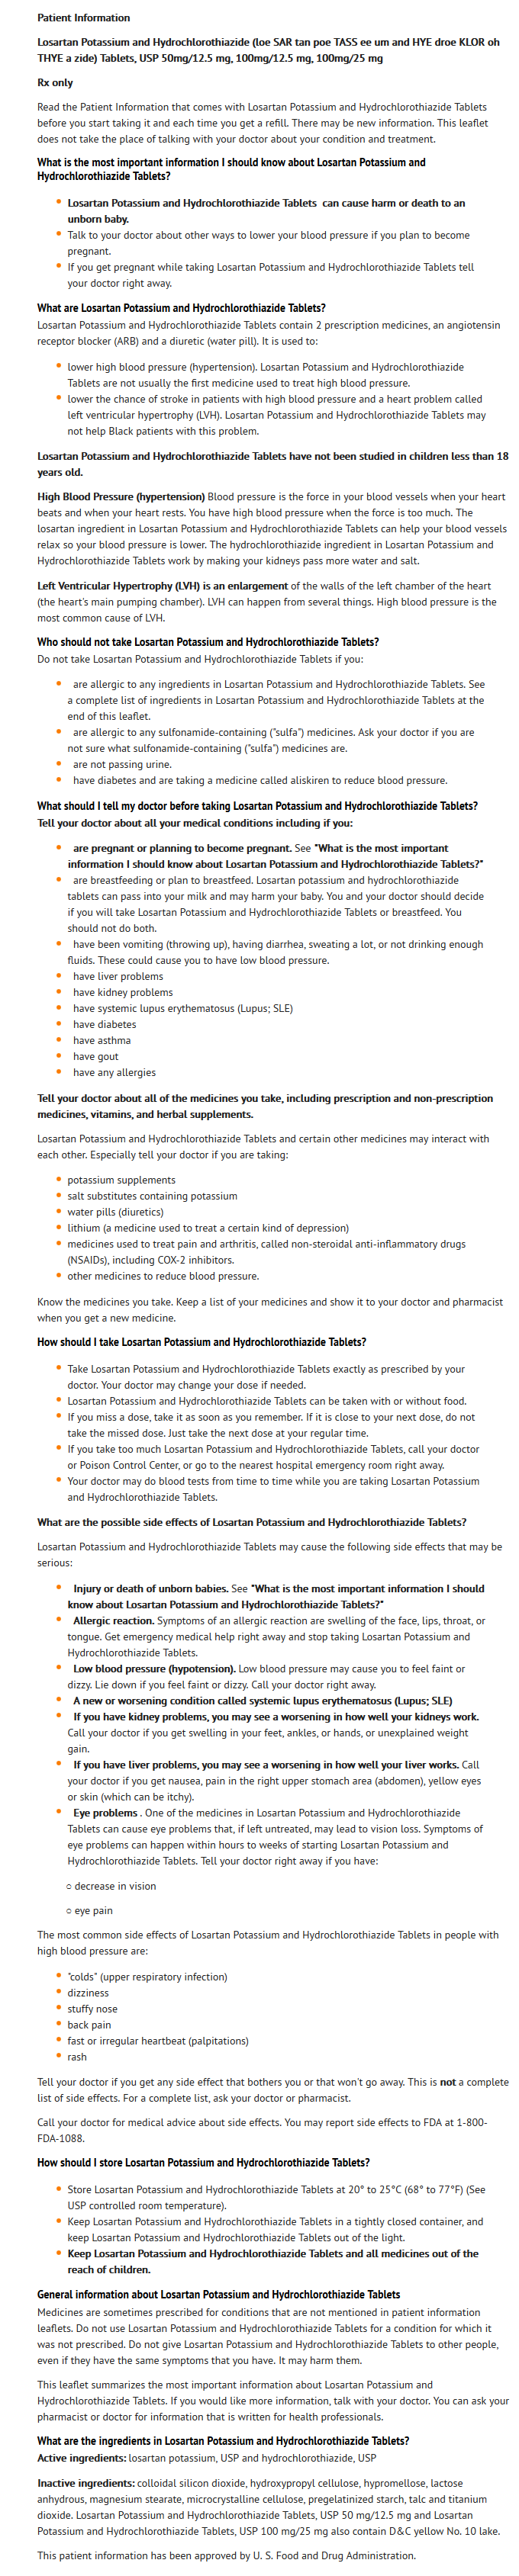 File:Losartan and Hydrochlorothiazide medication guide.png